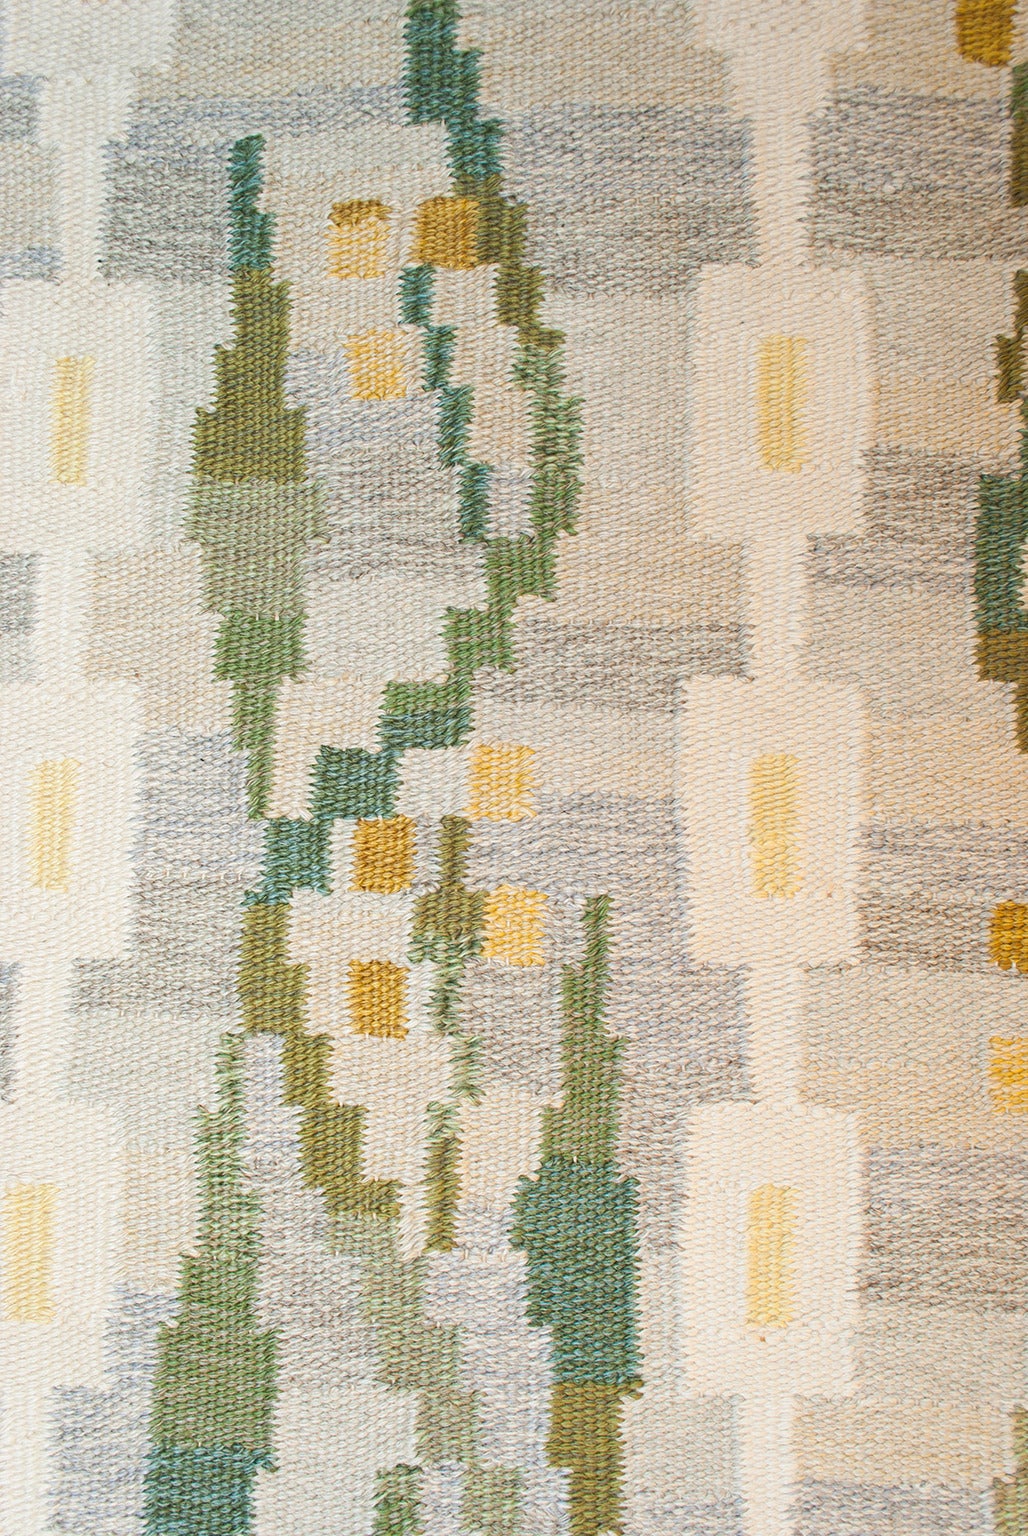 Mid-Century Modern Swedish mid-century wool flat weave rug with yellow flowers on heathered ground.